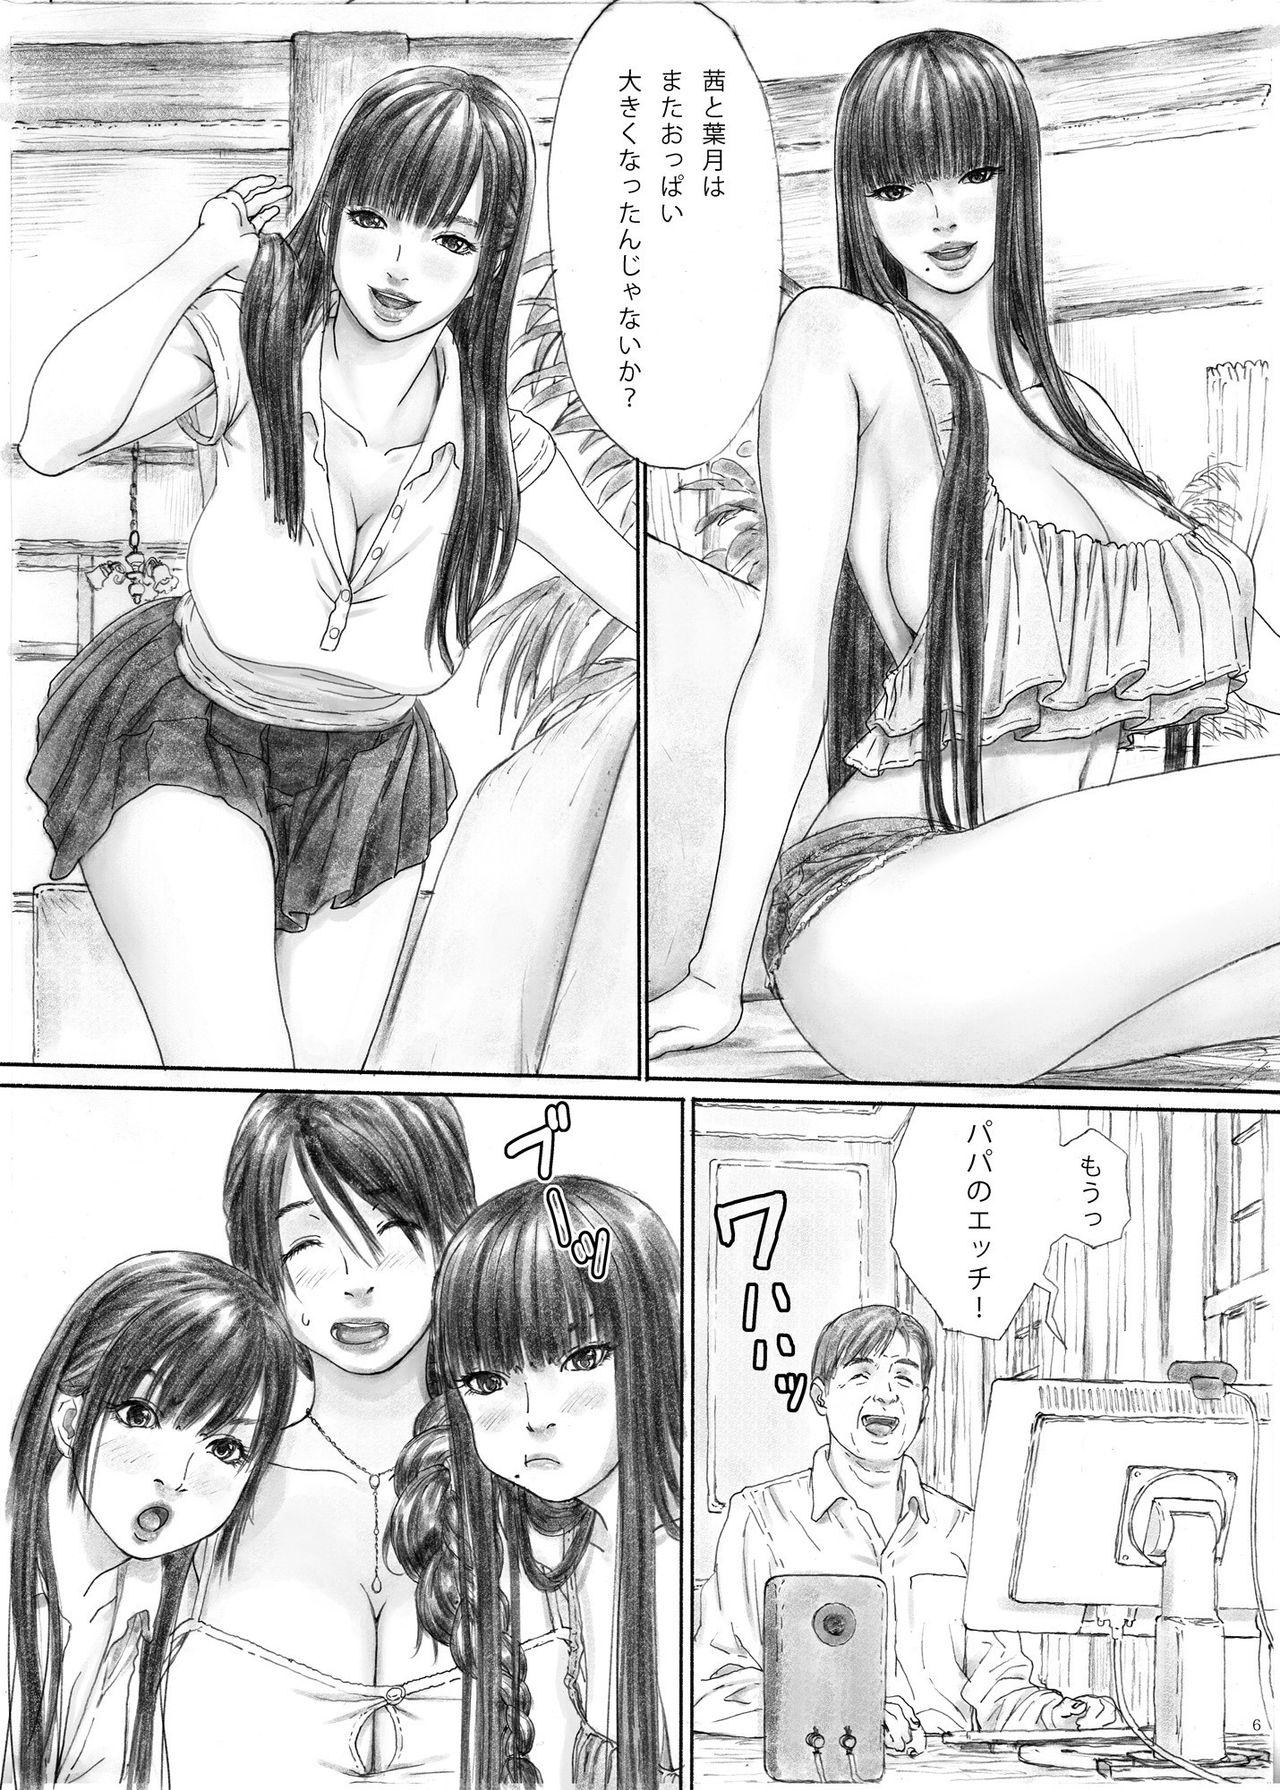 Tinder Inyoku no Sumika 1 - Original Strip - Page 5